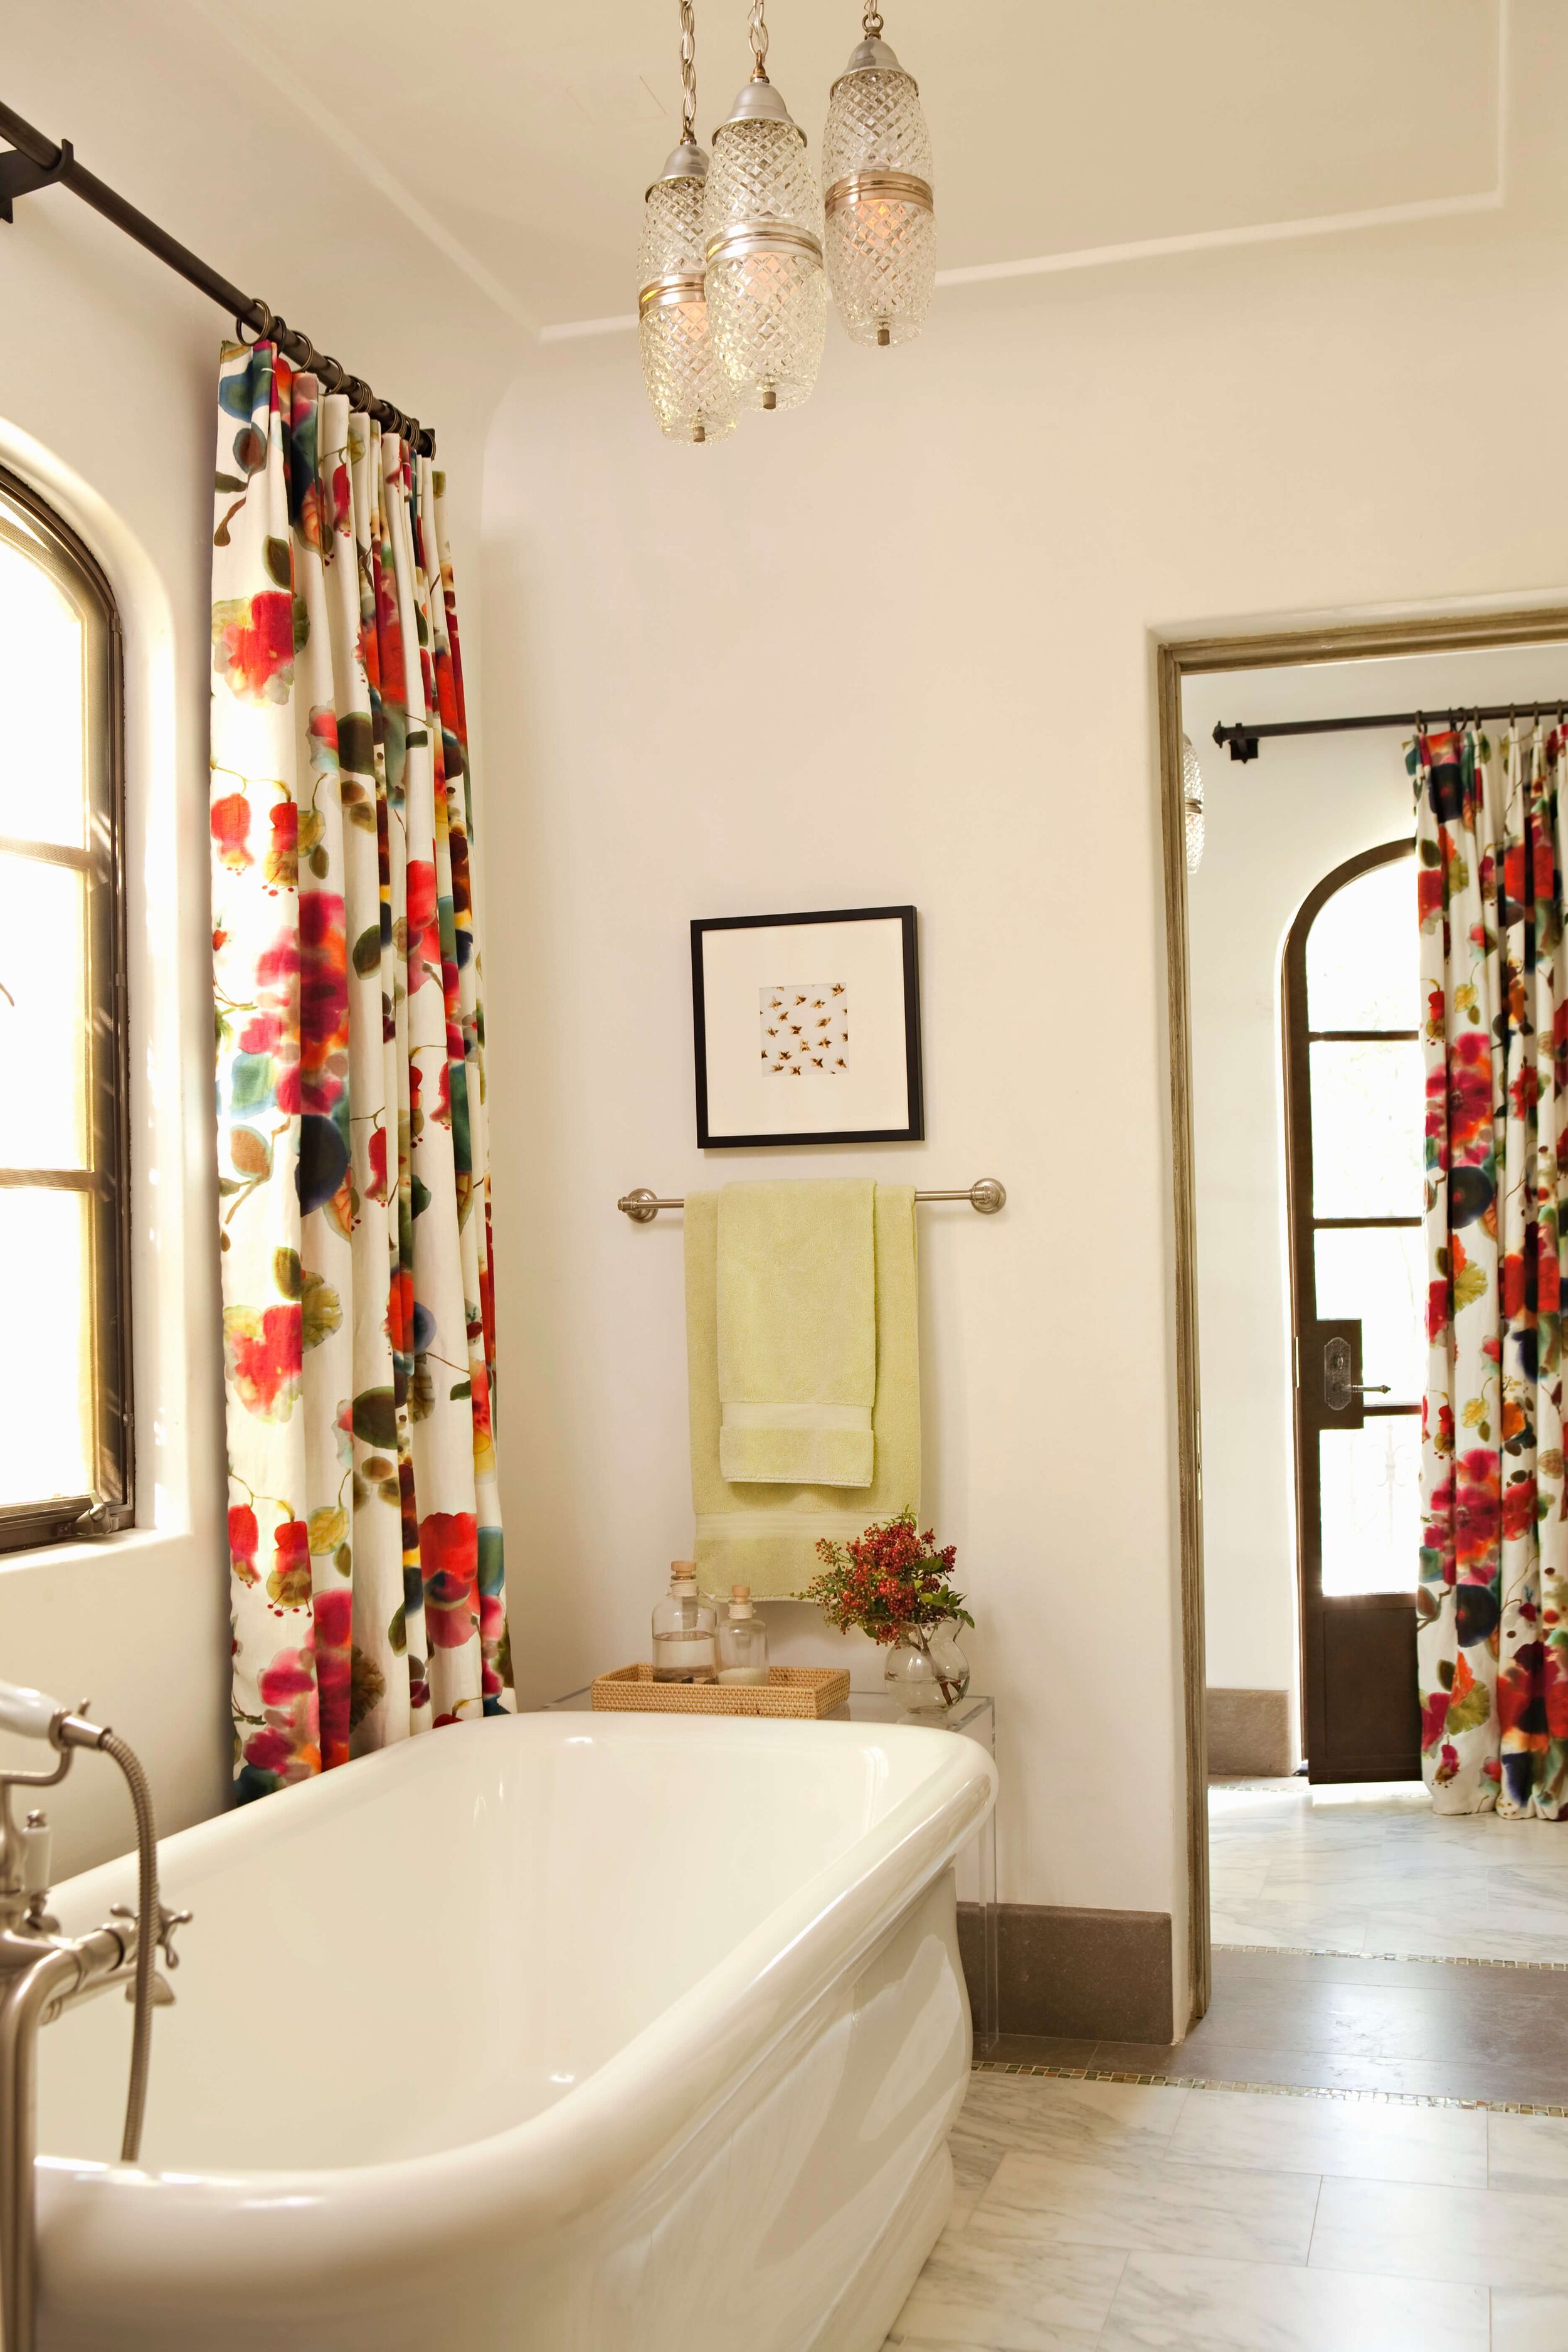 Malibu bathroom with a stand alone tube, elegant chandelier and custom floral drapery